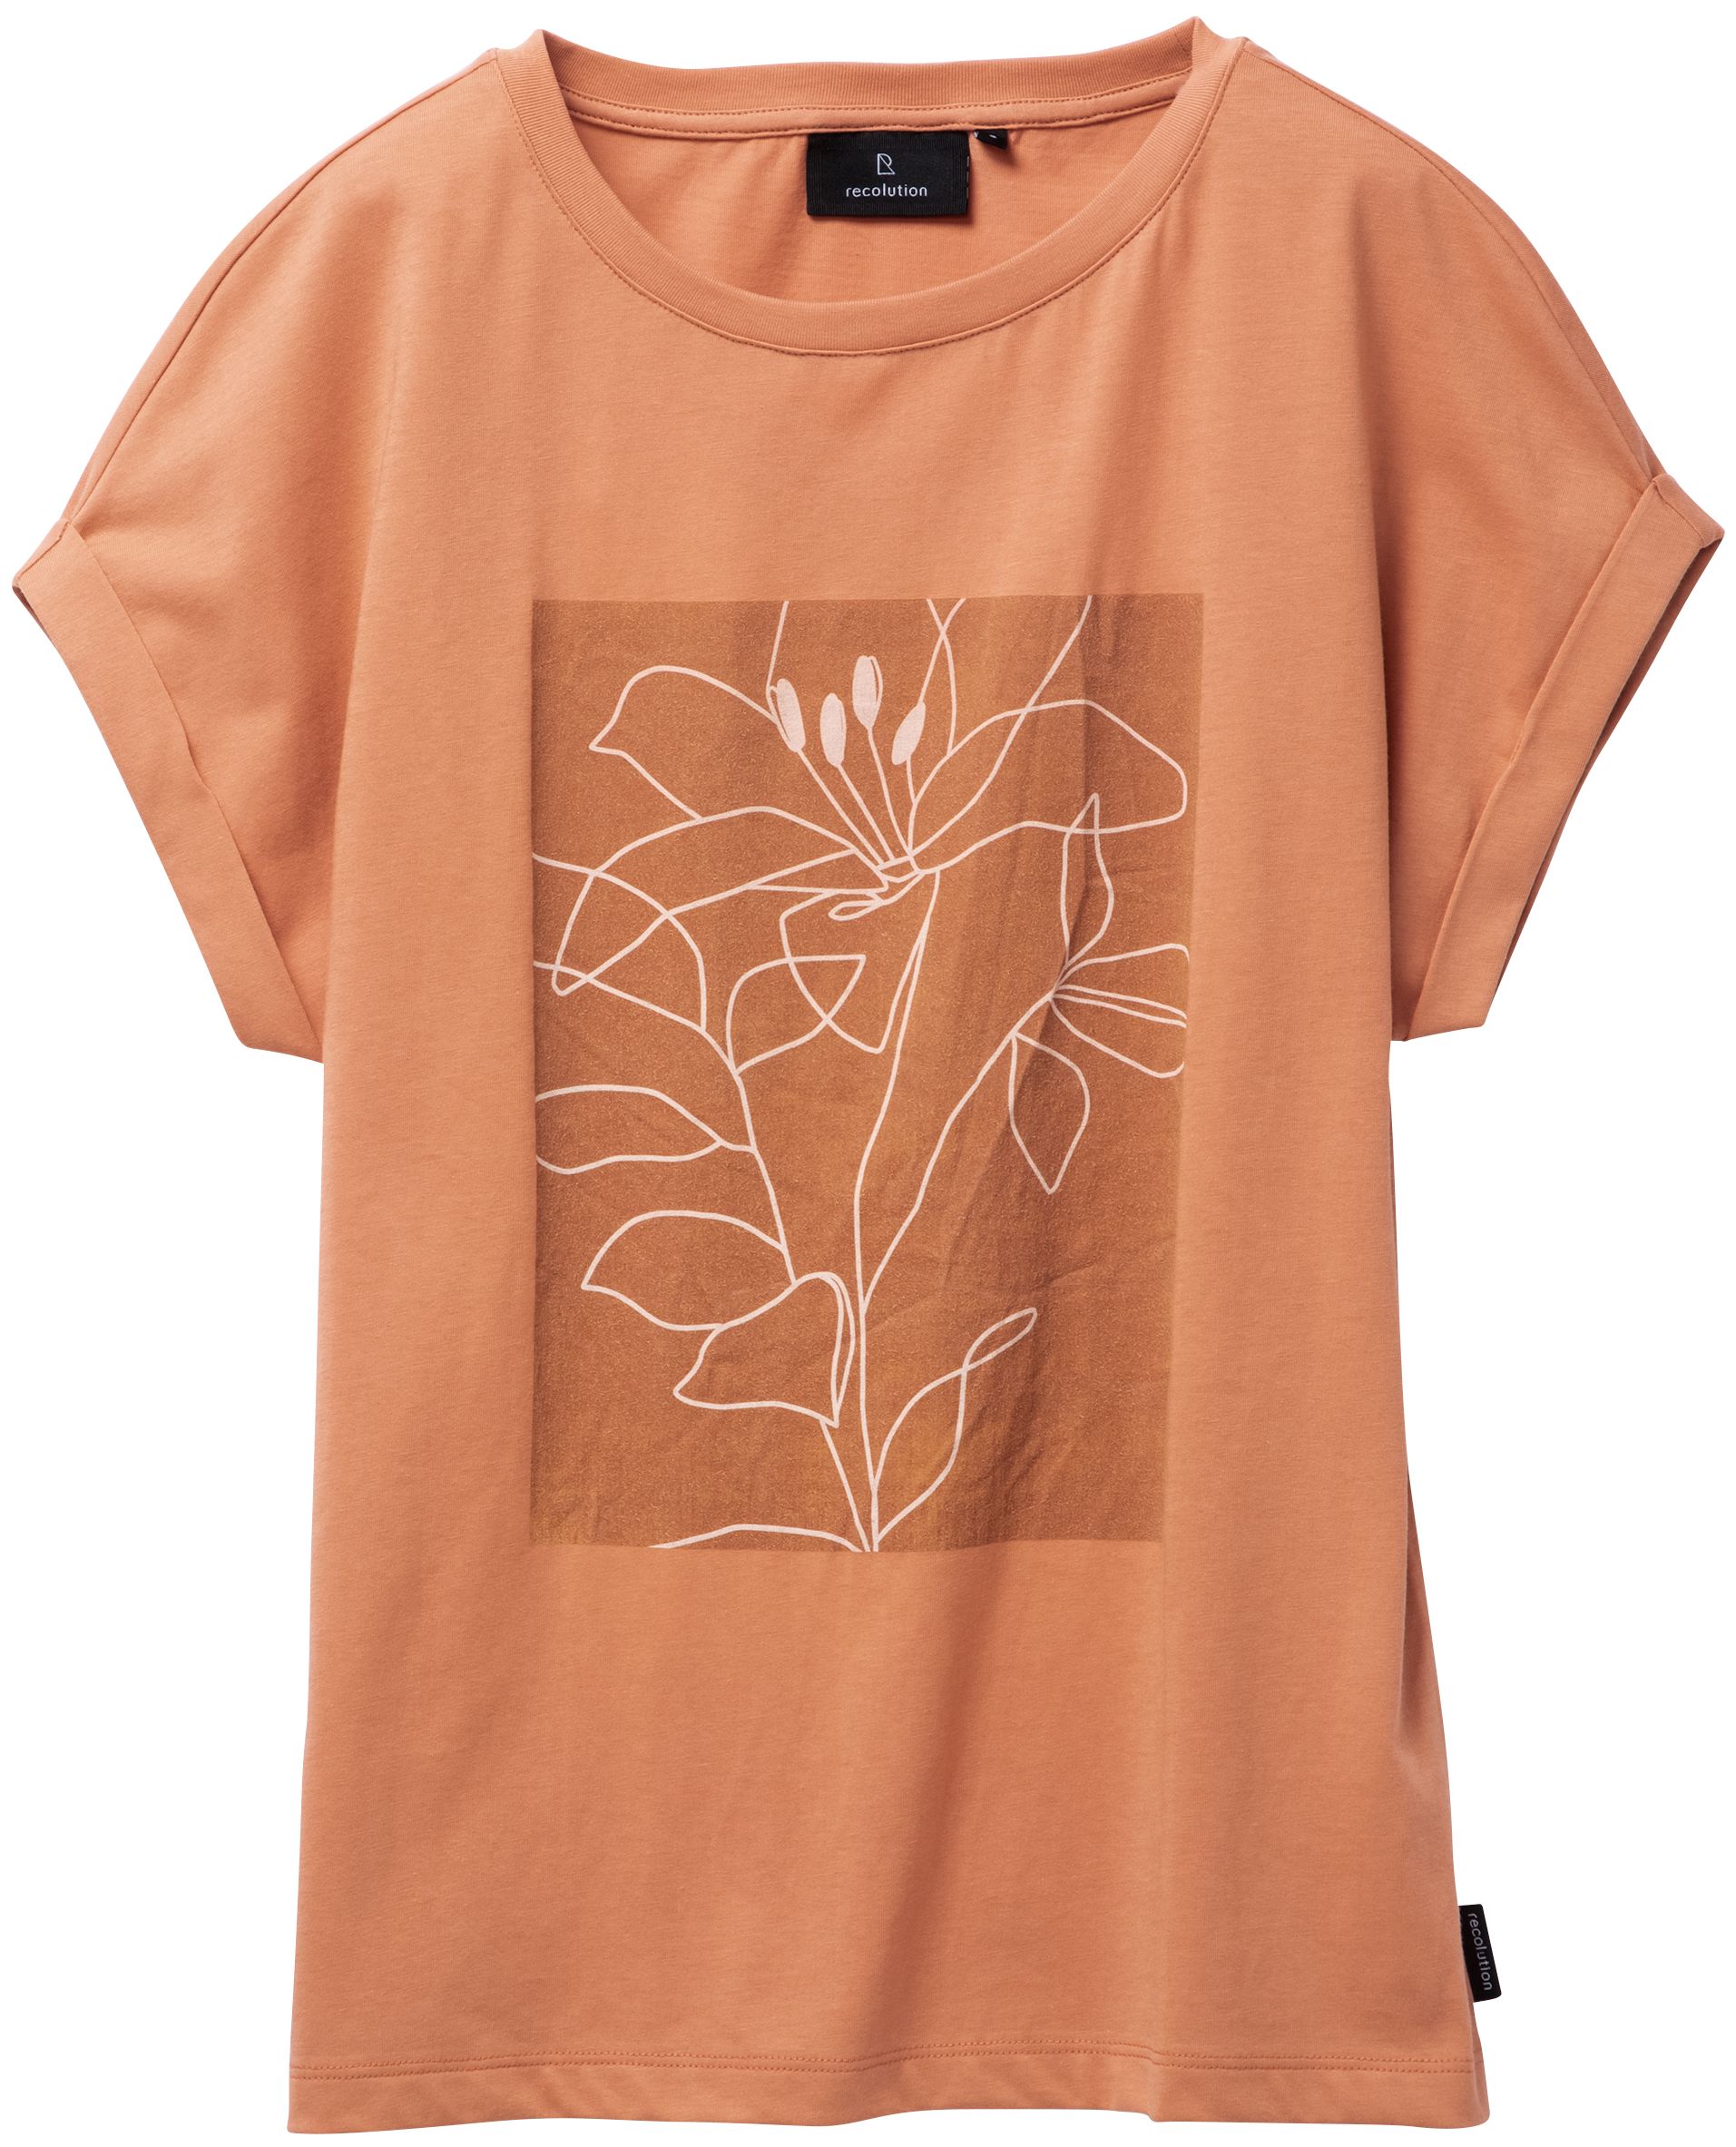 Bedrucktes Shirt CAYENNE FLOWER LINES capri orange